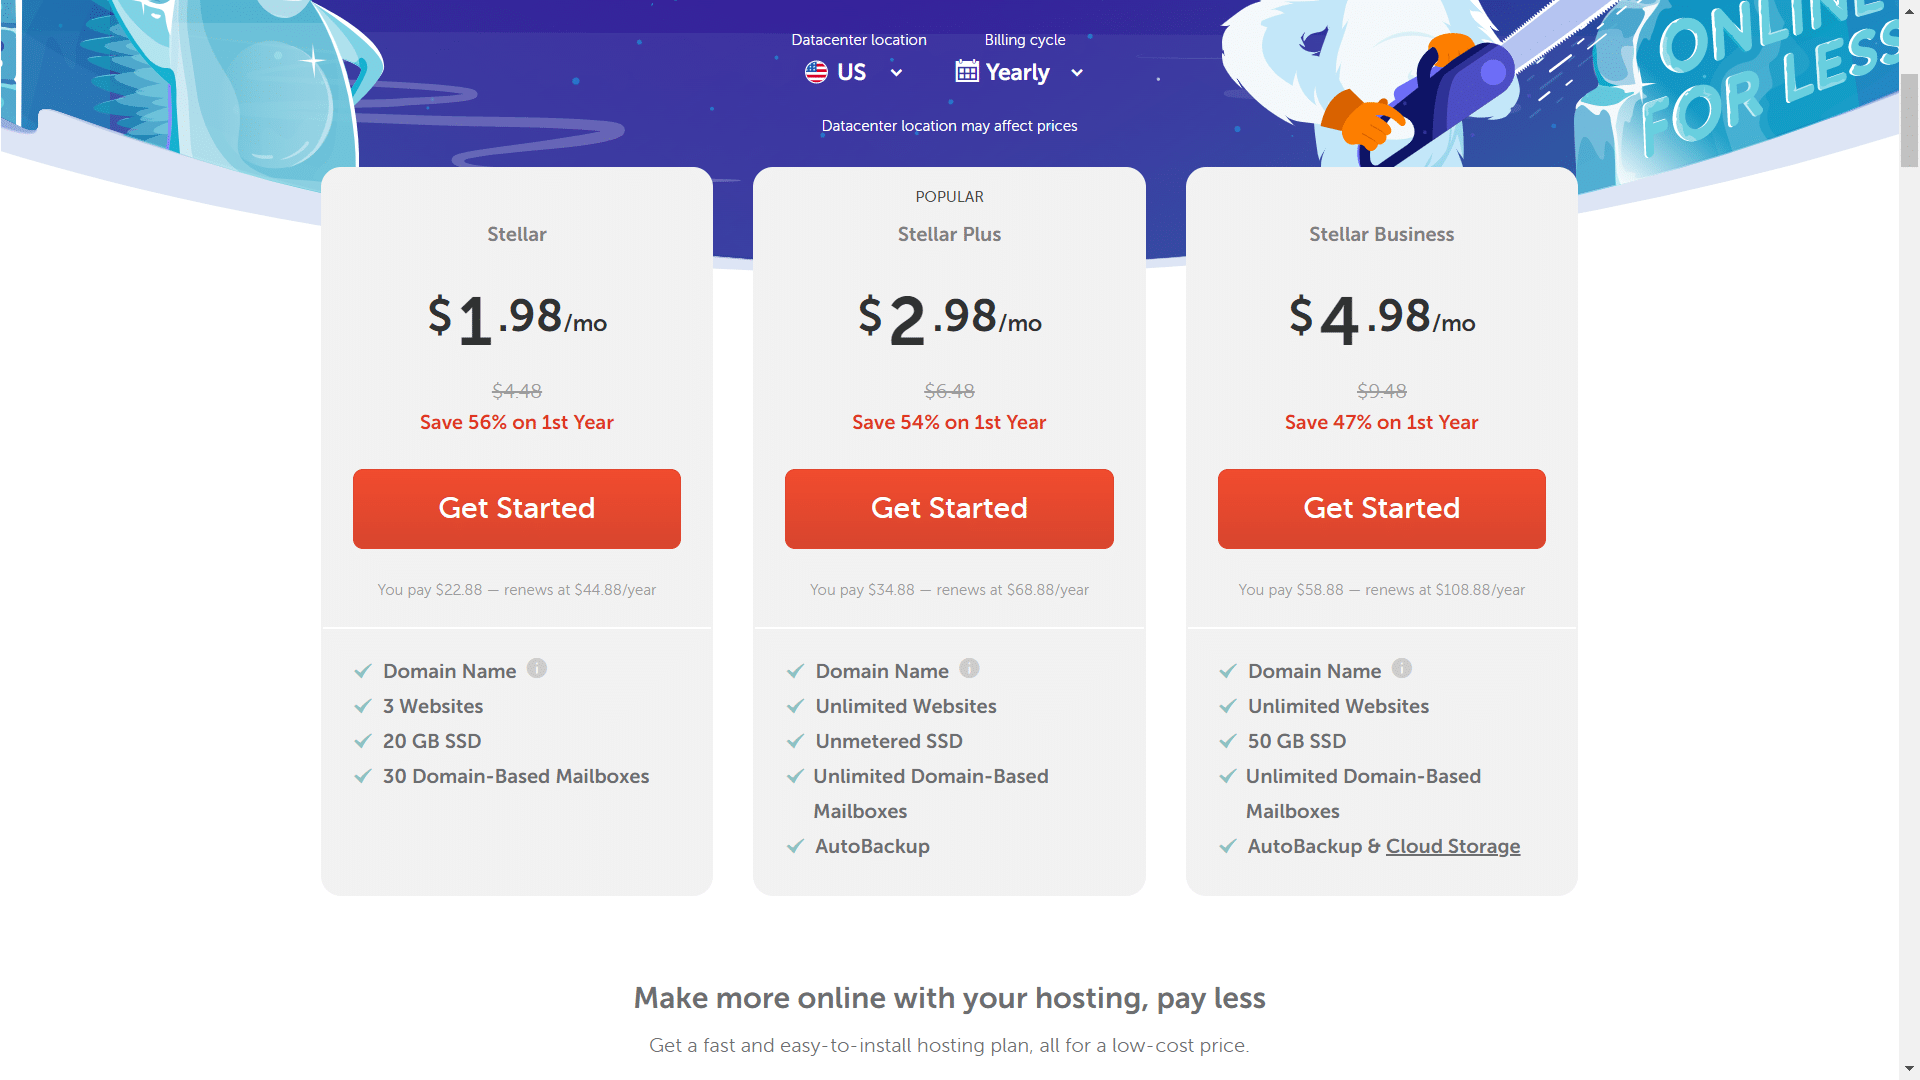 accuweb vs namecheap - namecheap shared hosting pricing